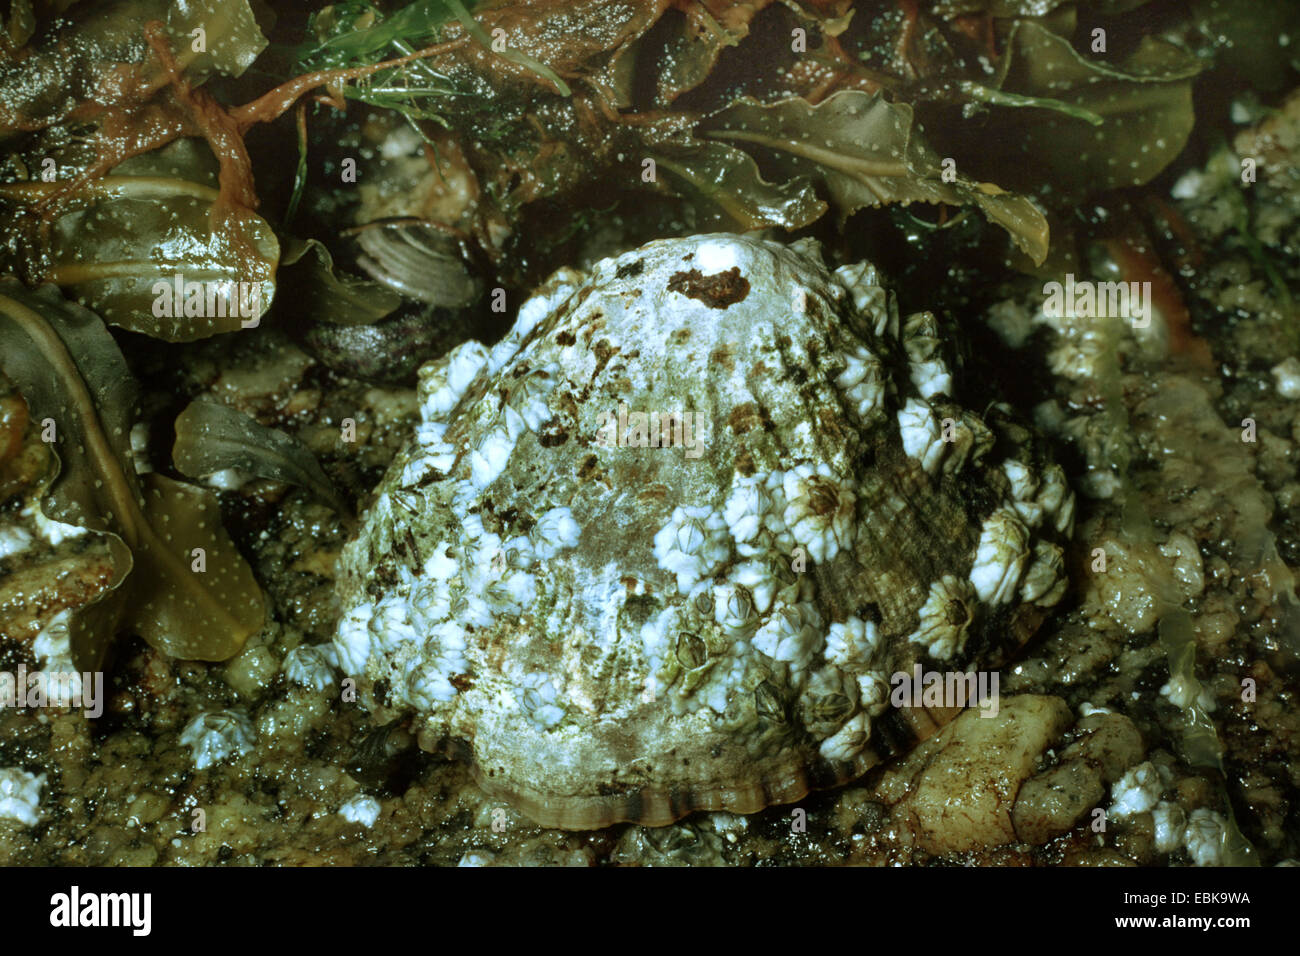 common limpet, common European limpet (Patella vulgata), on coastal rocks at low tide, Germany Stock Photo